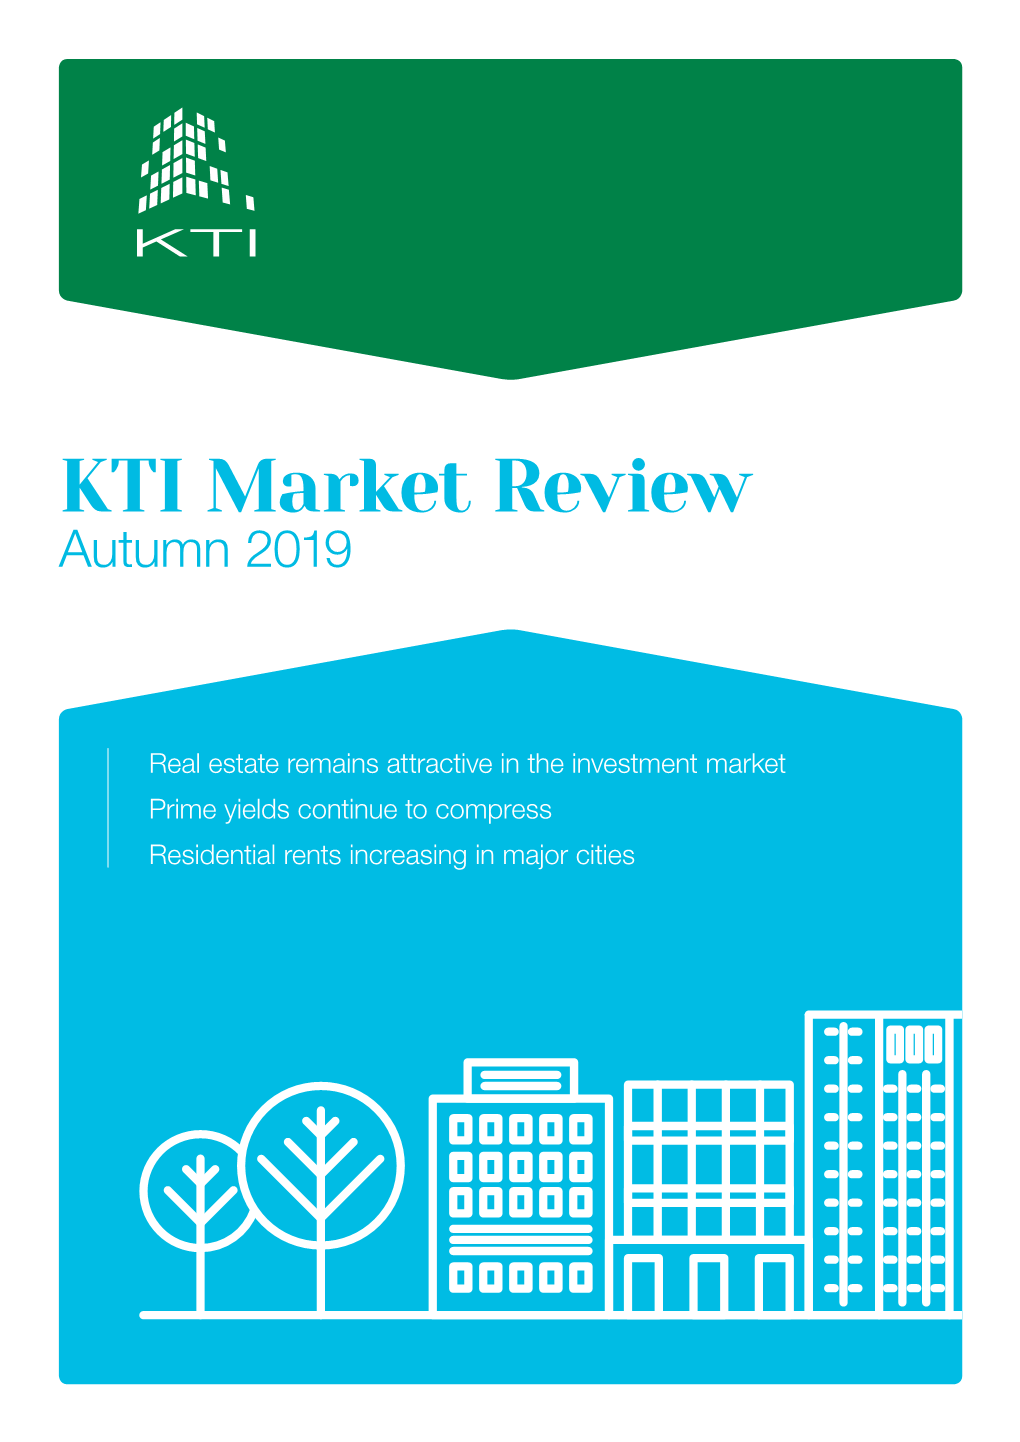 Read More at KTI Market Review, Autumn 2019